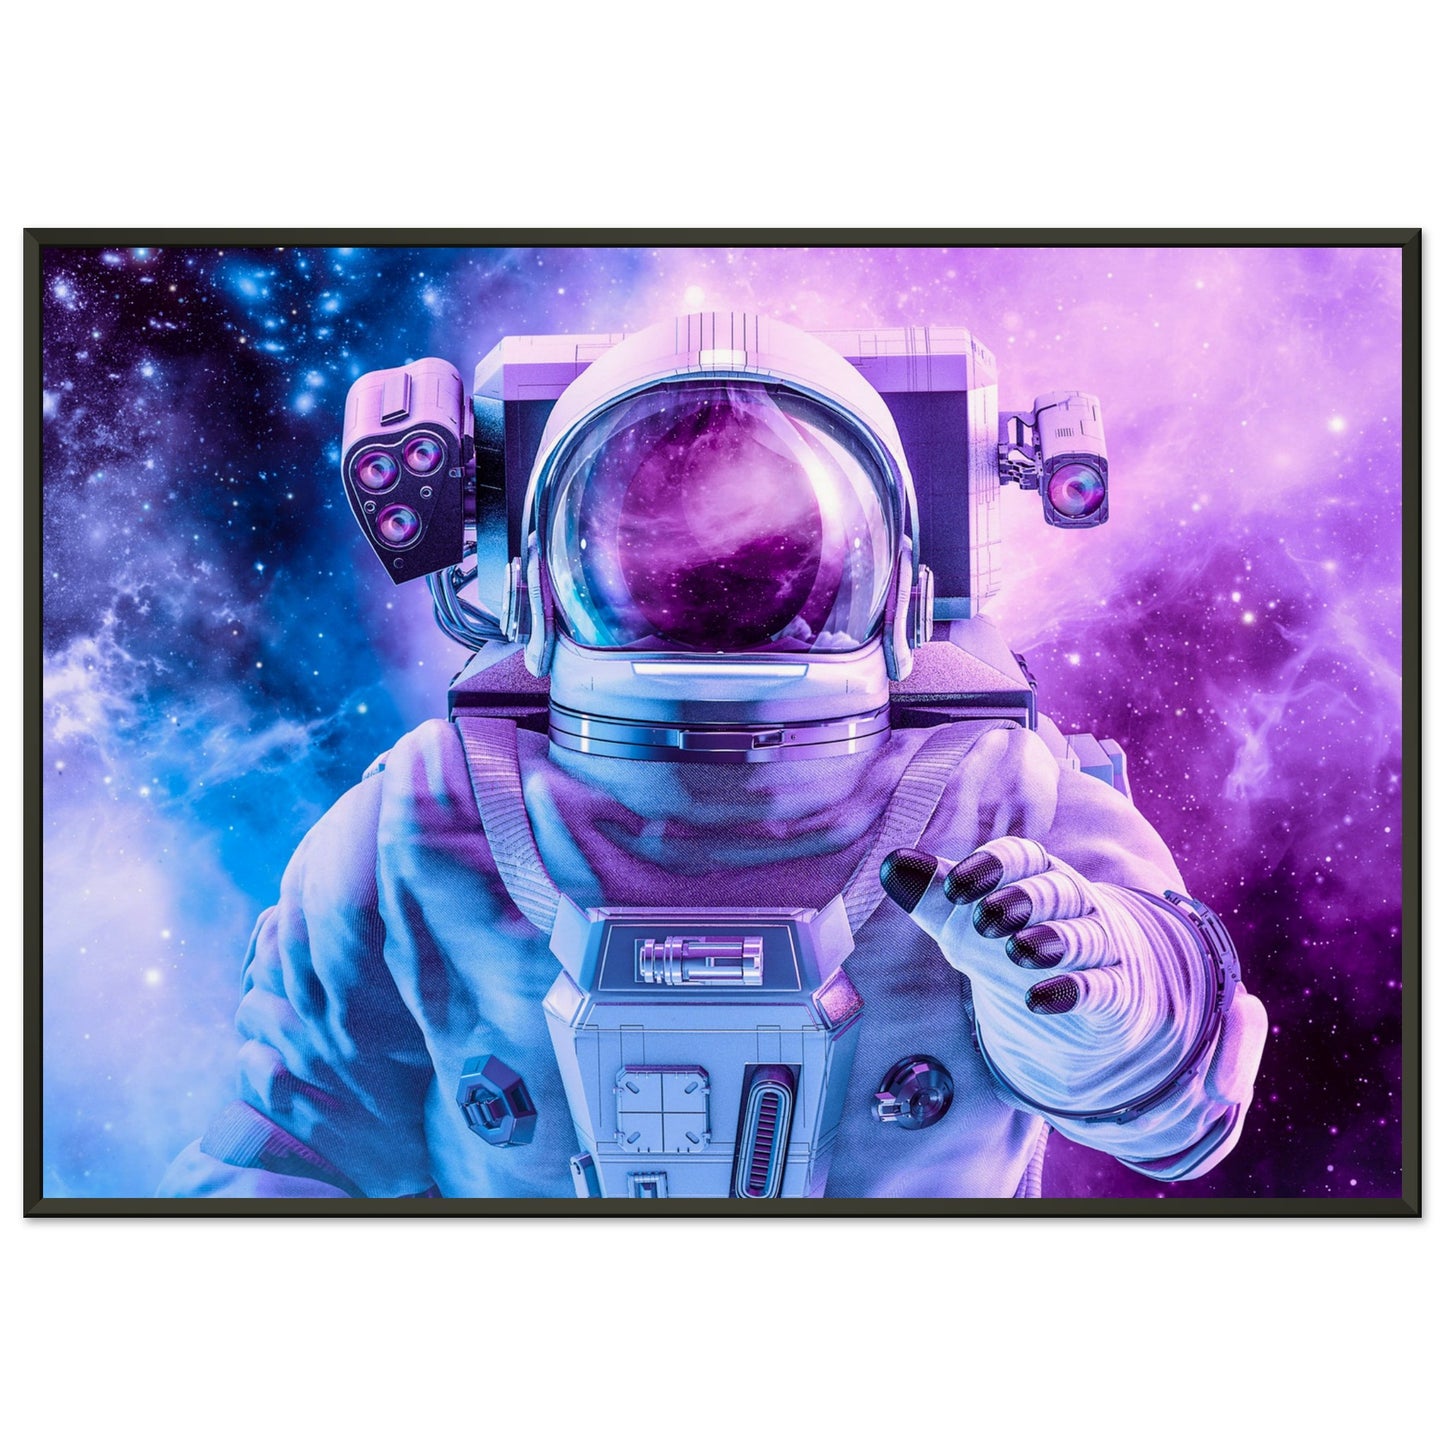 Astronaut surrounded by nebula